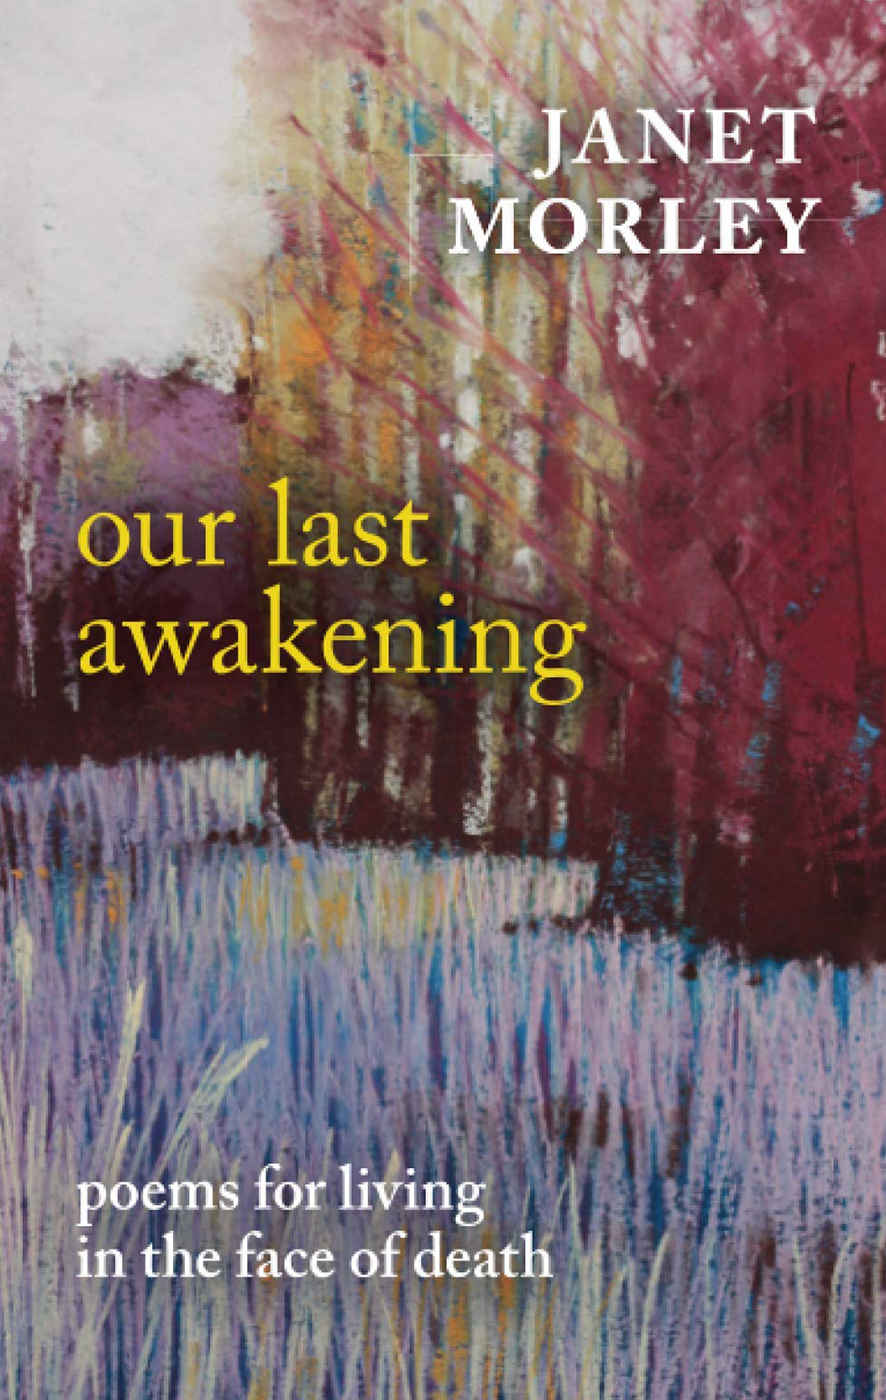 Our last awakening